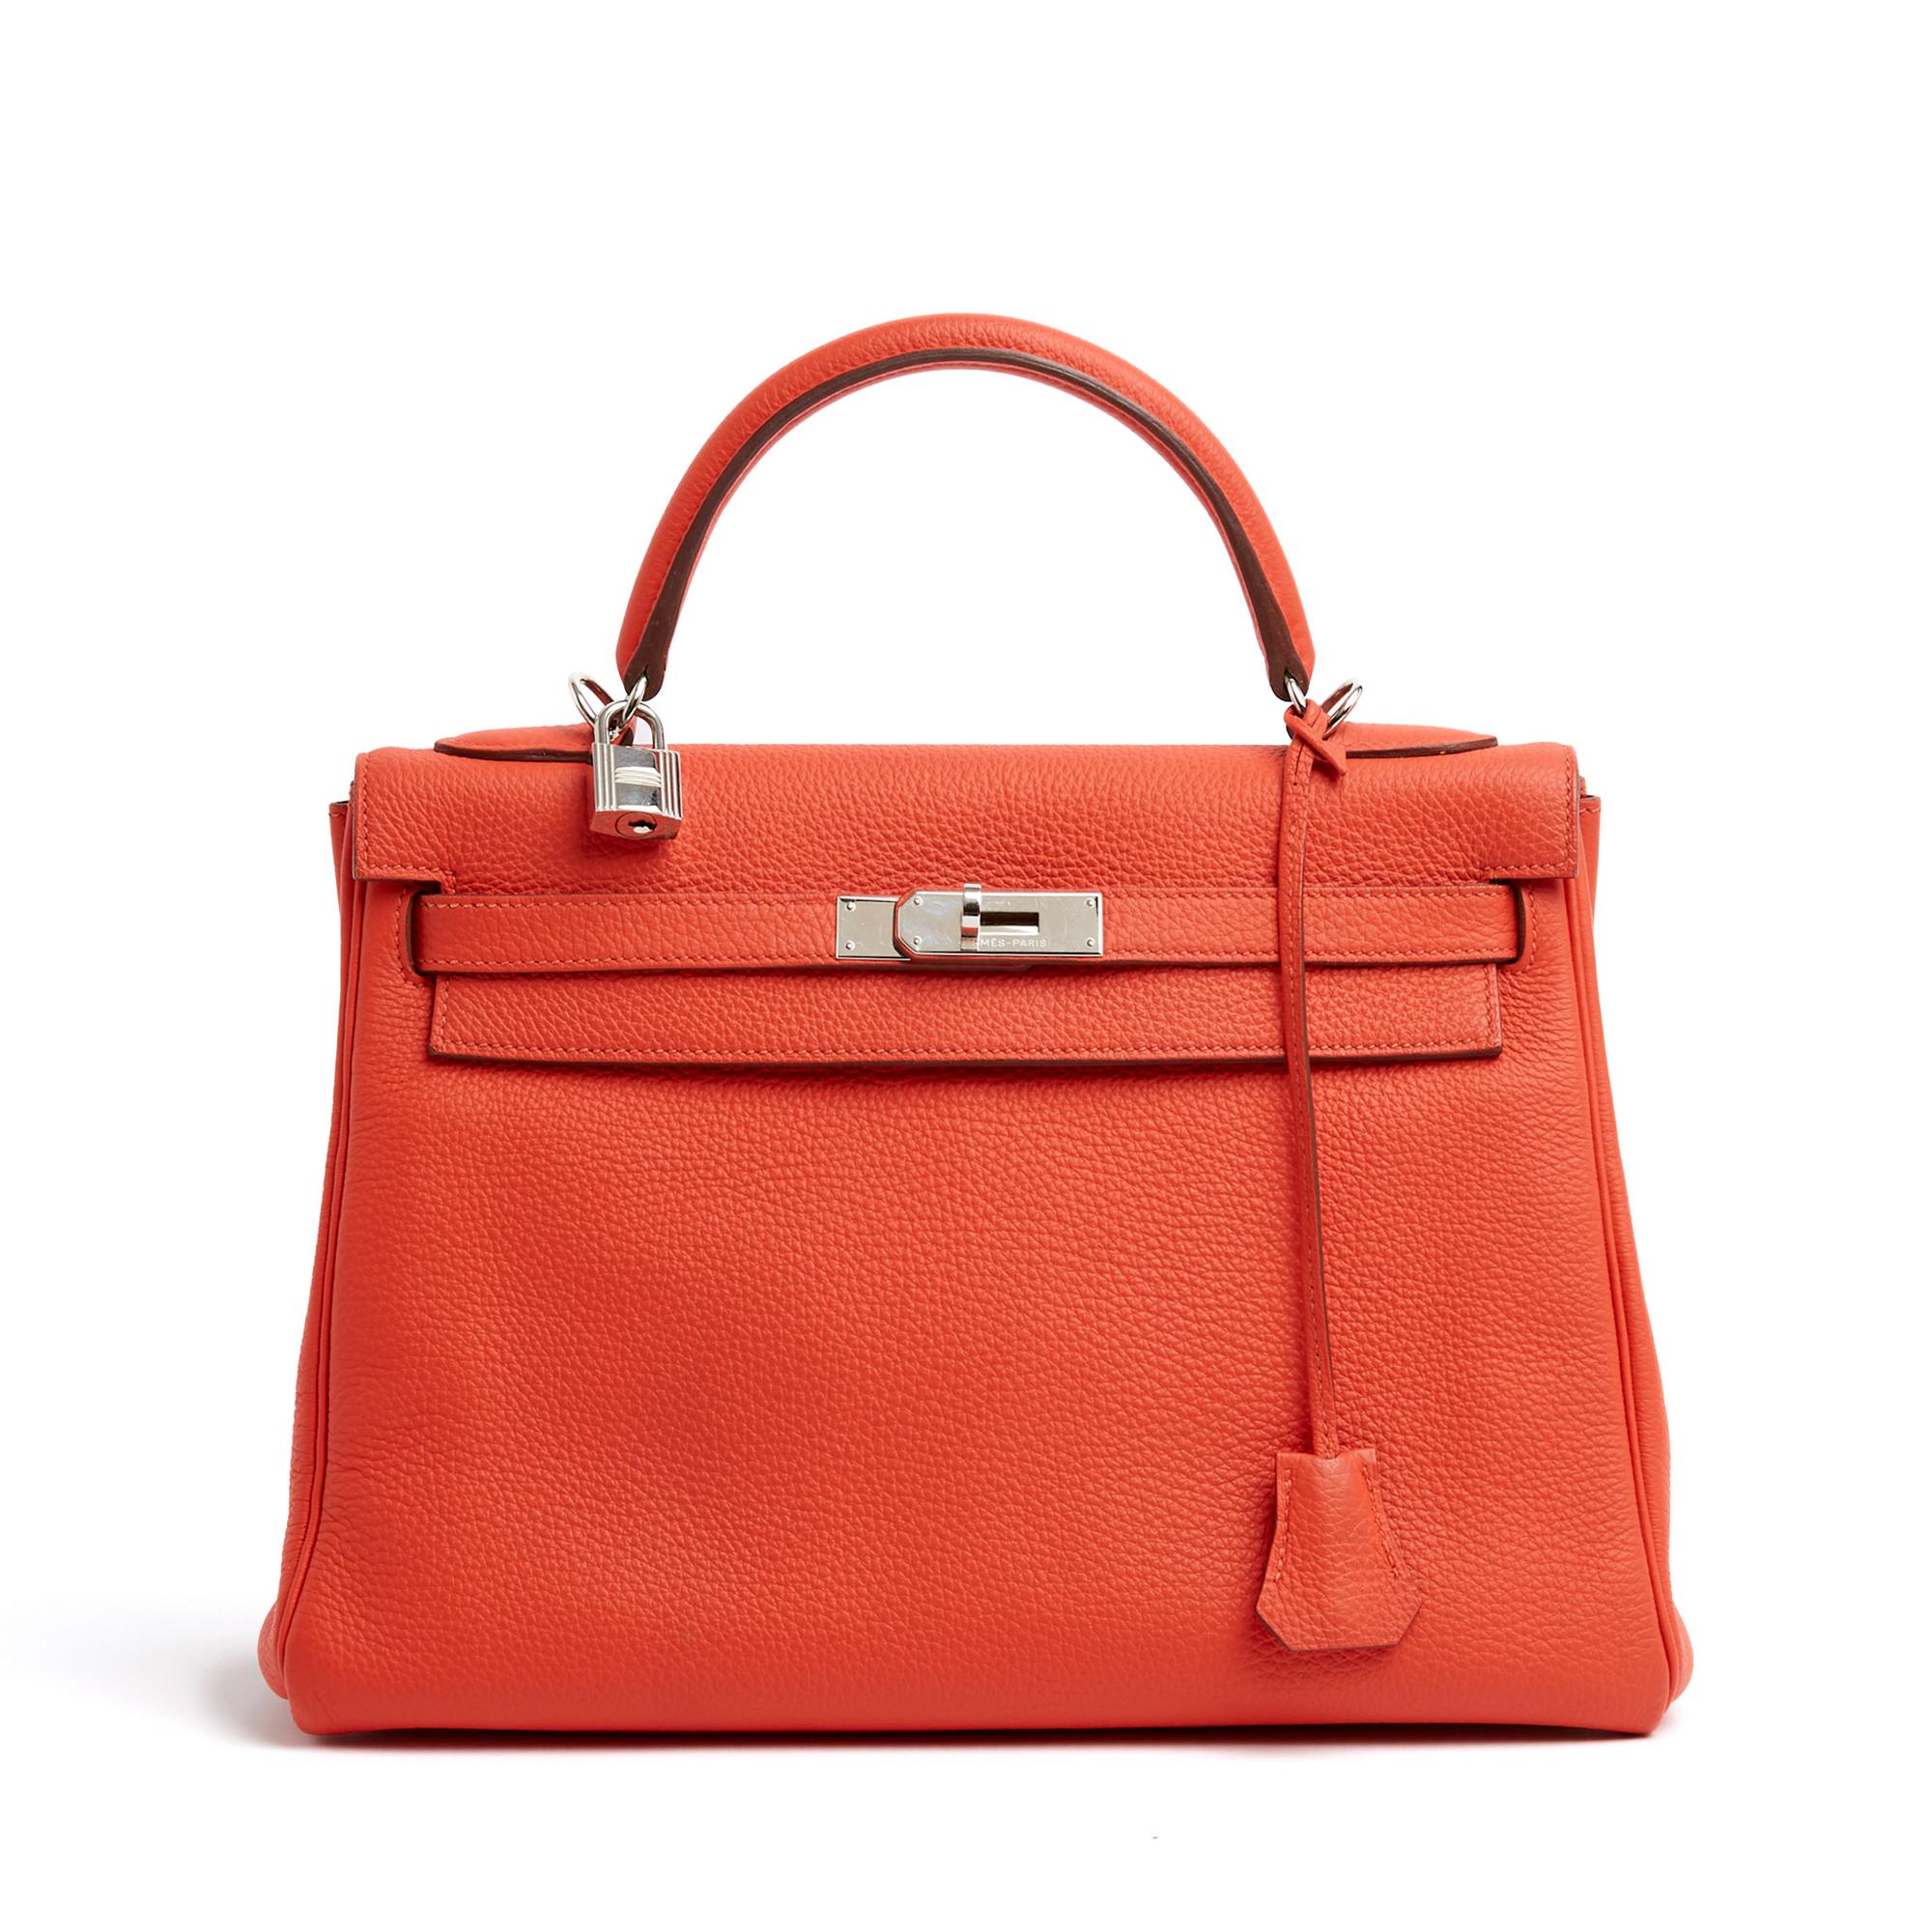 Hermès bag model Kelly II size 32 in orange grained leather called 